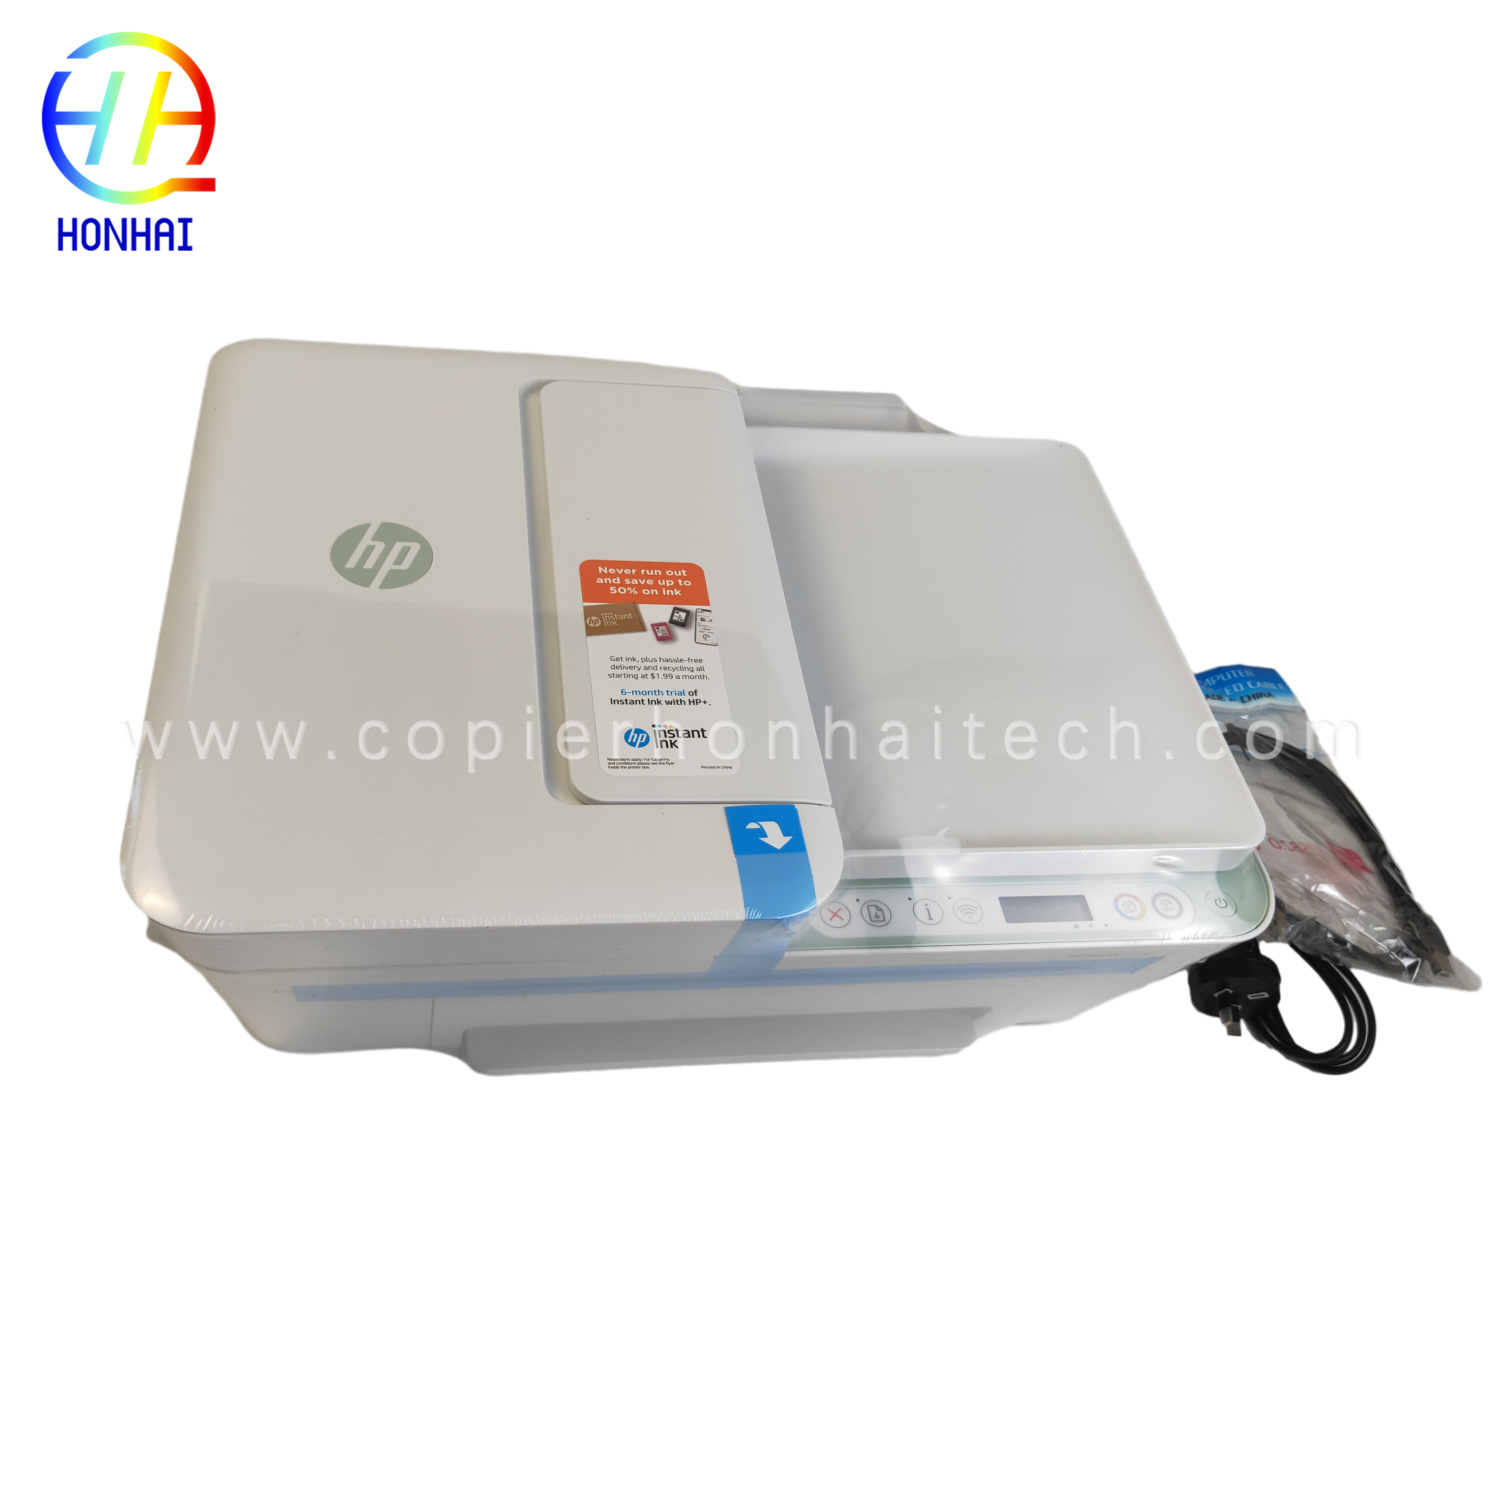 https://www.copierhonhaitech.com/original-new-wireless-printer-for-hp-deskjet-4122e-all-in-one-printer-scan-and-copy-home-office-students-and-home- ម៉ាស៊ីនបោះពុម្ព-26q96a-ផលិតផល/